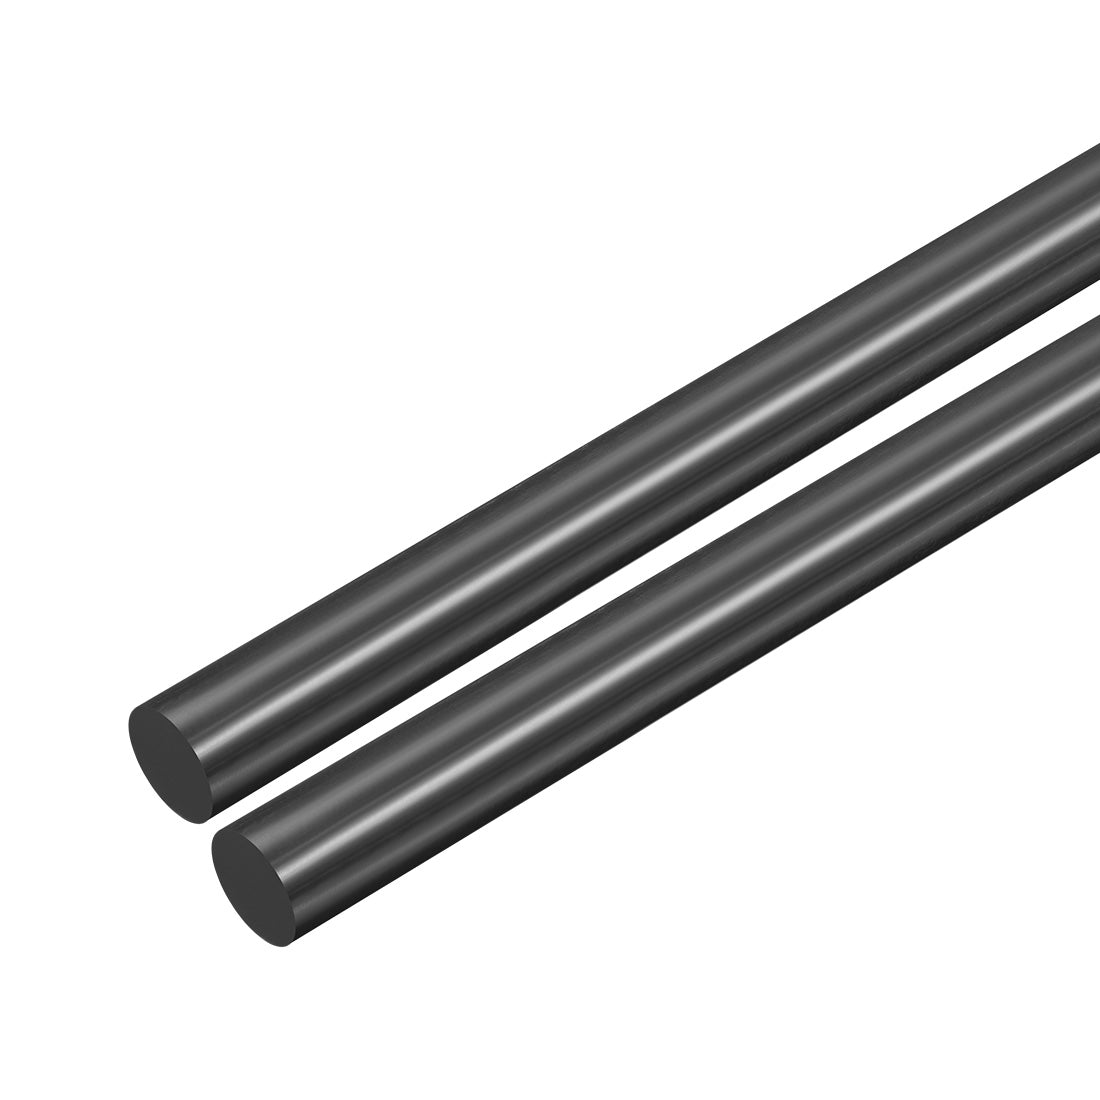 uxcell Uxcell Plastic Round Rod,8mm Dia 50cm Black Engineering Plastic Round Bar 2pcs